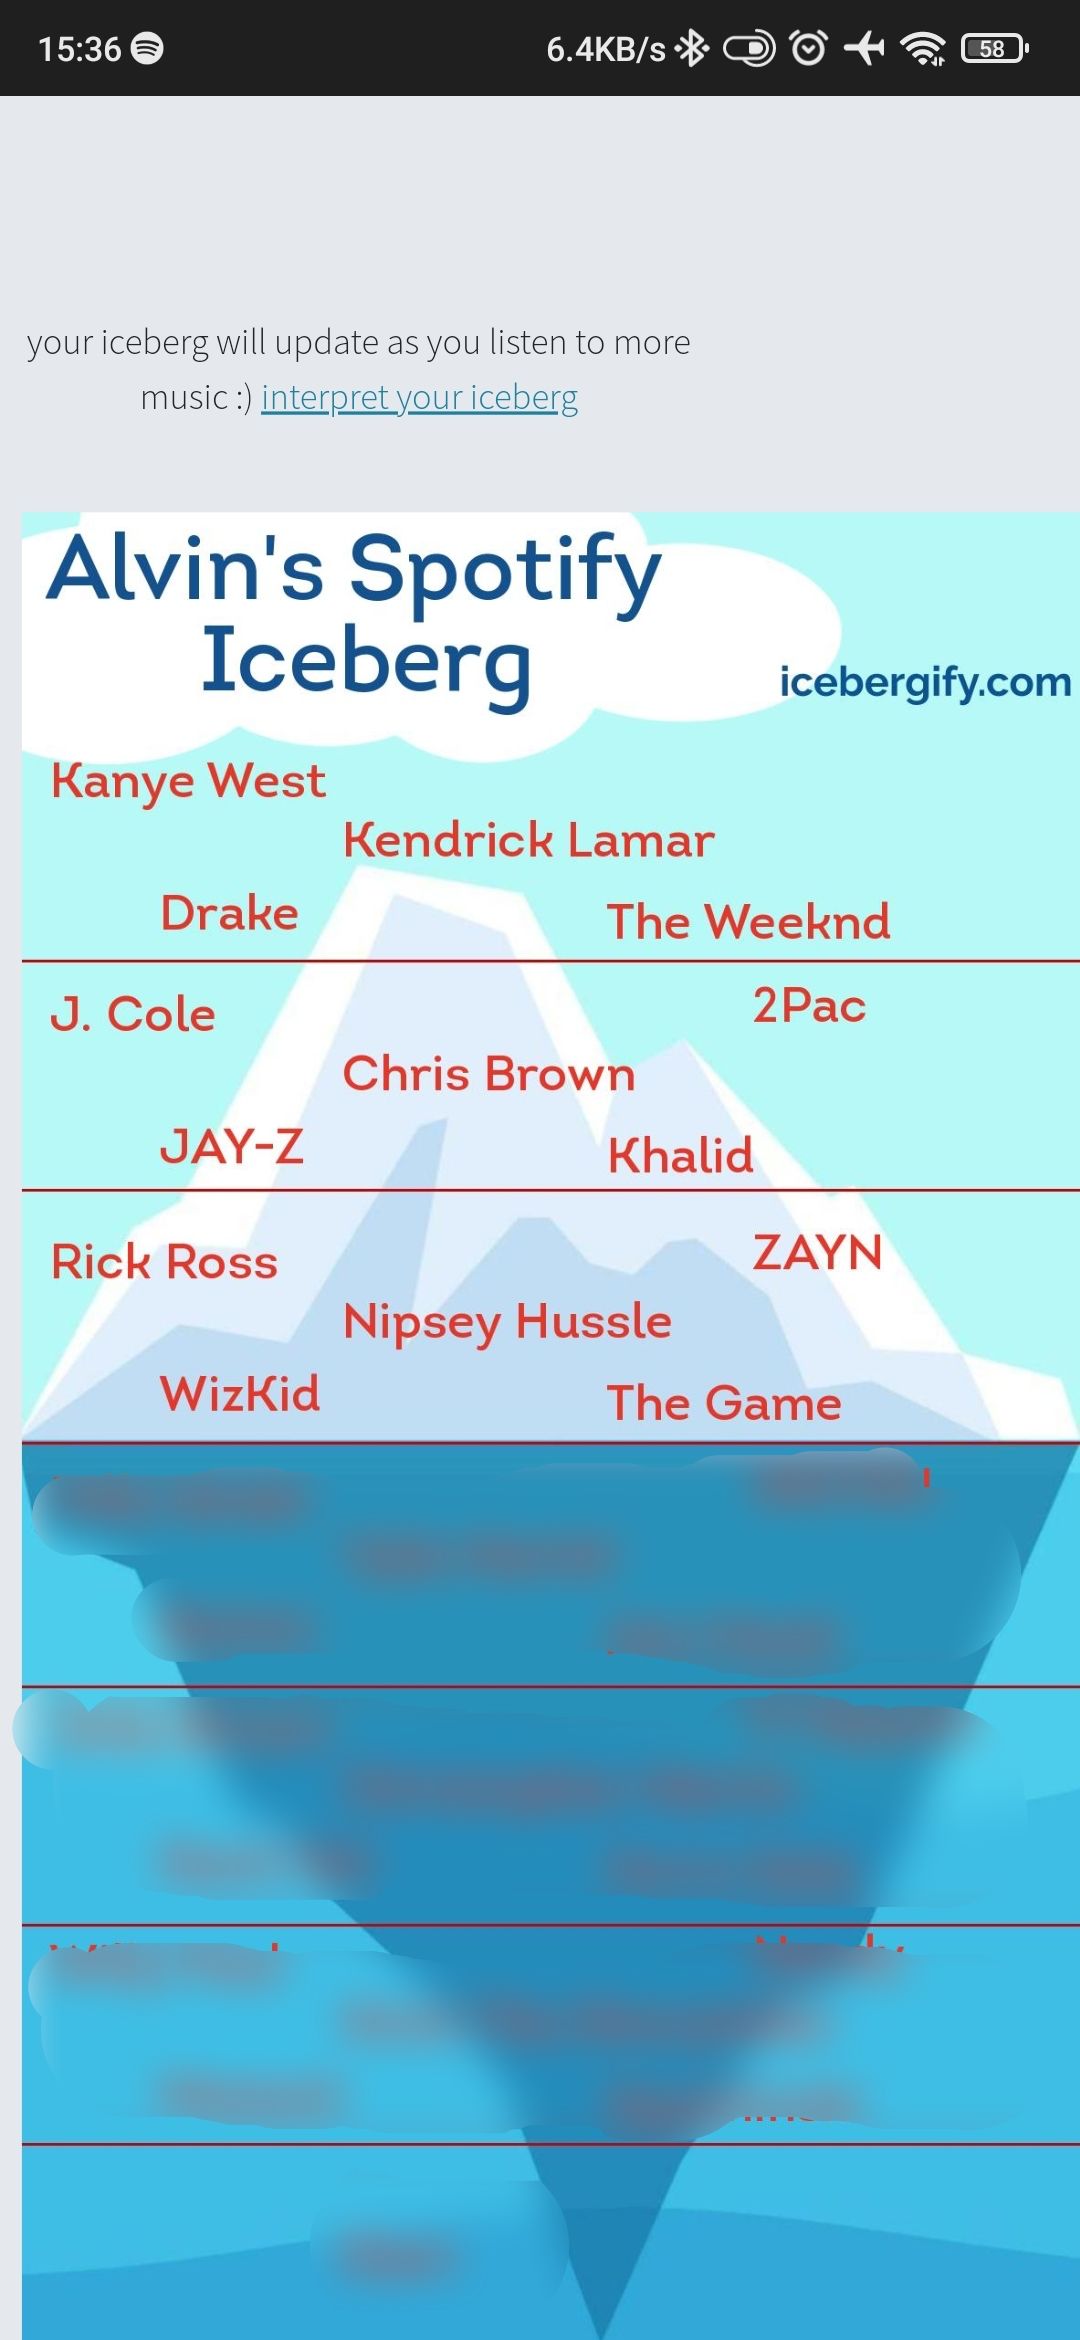 A Spotify Iceberg